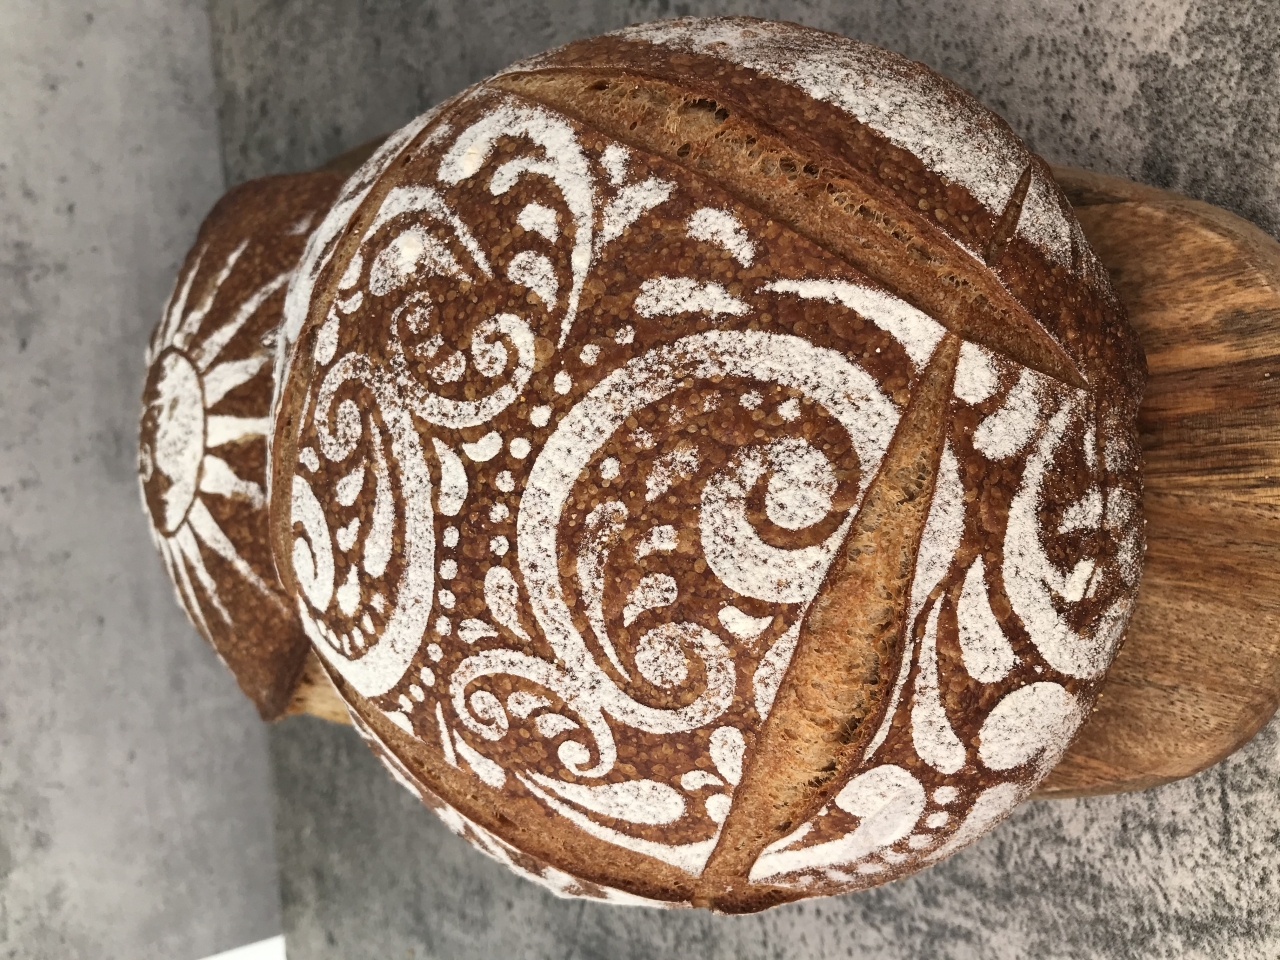 ReGrained Bread